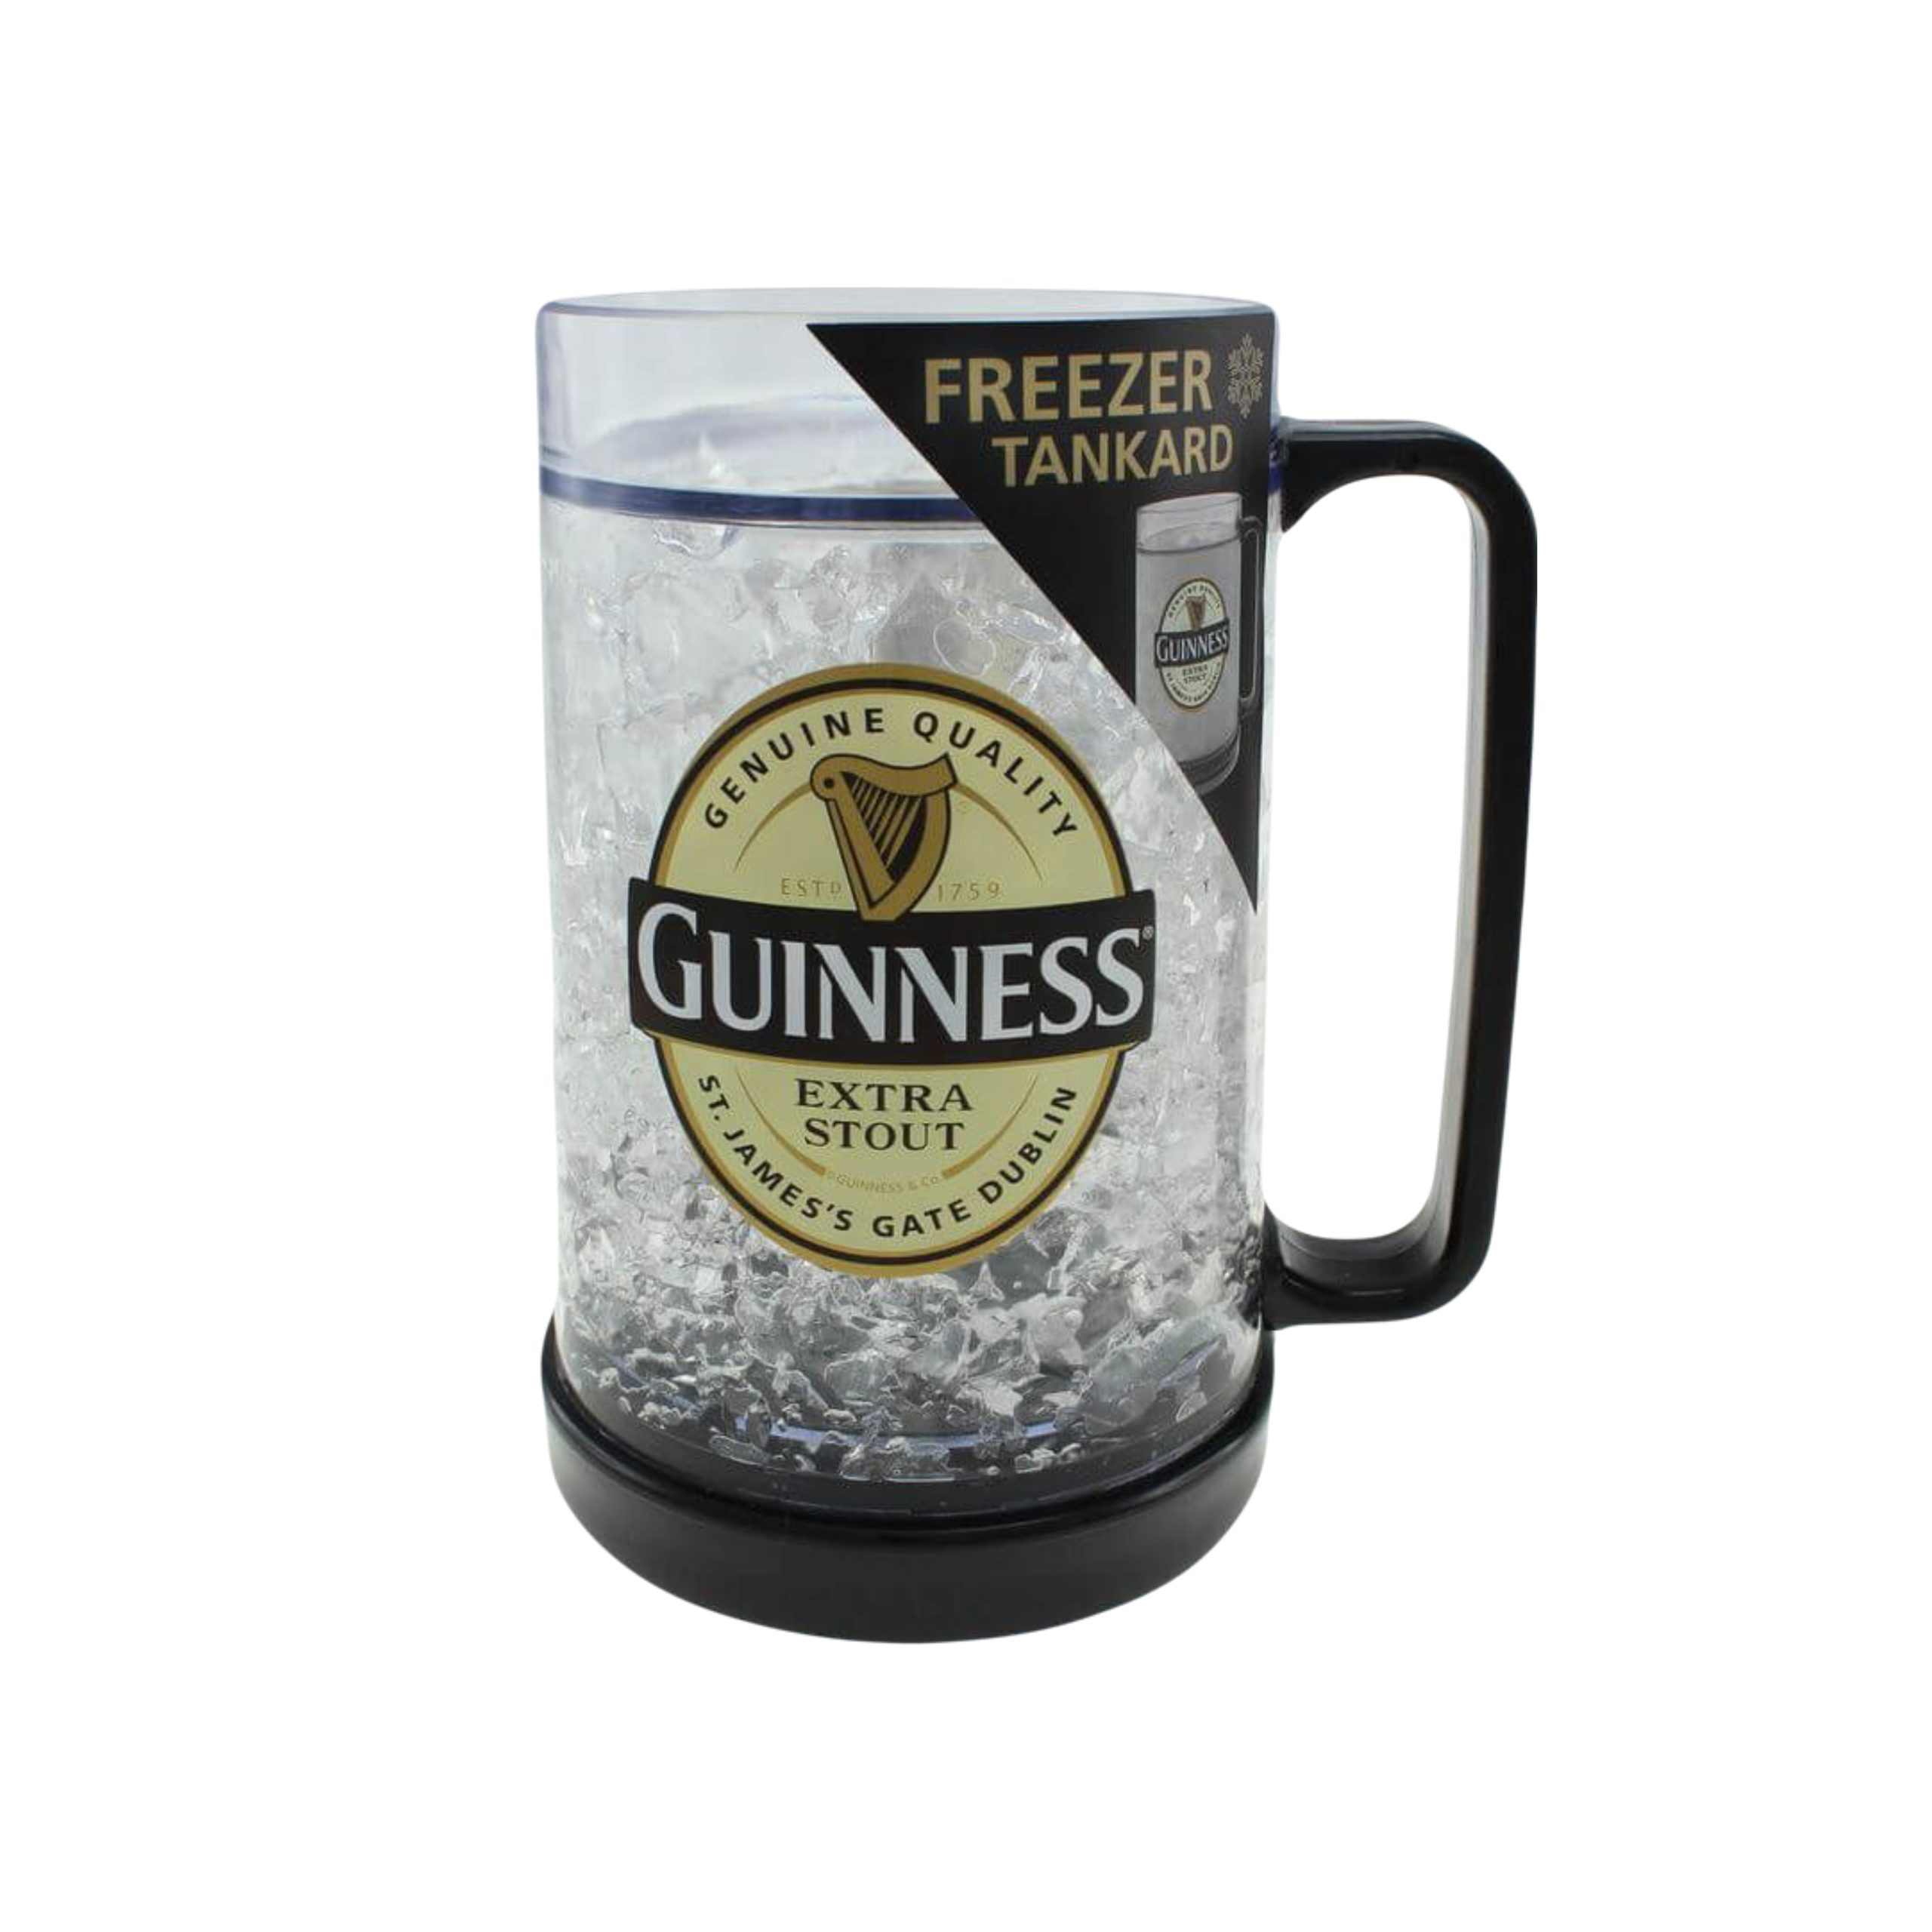 Guinness Freezer Tankard Beer Glass